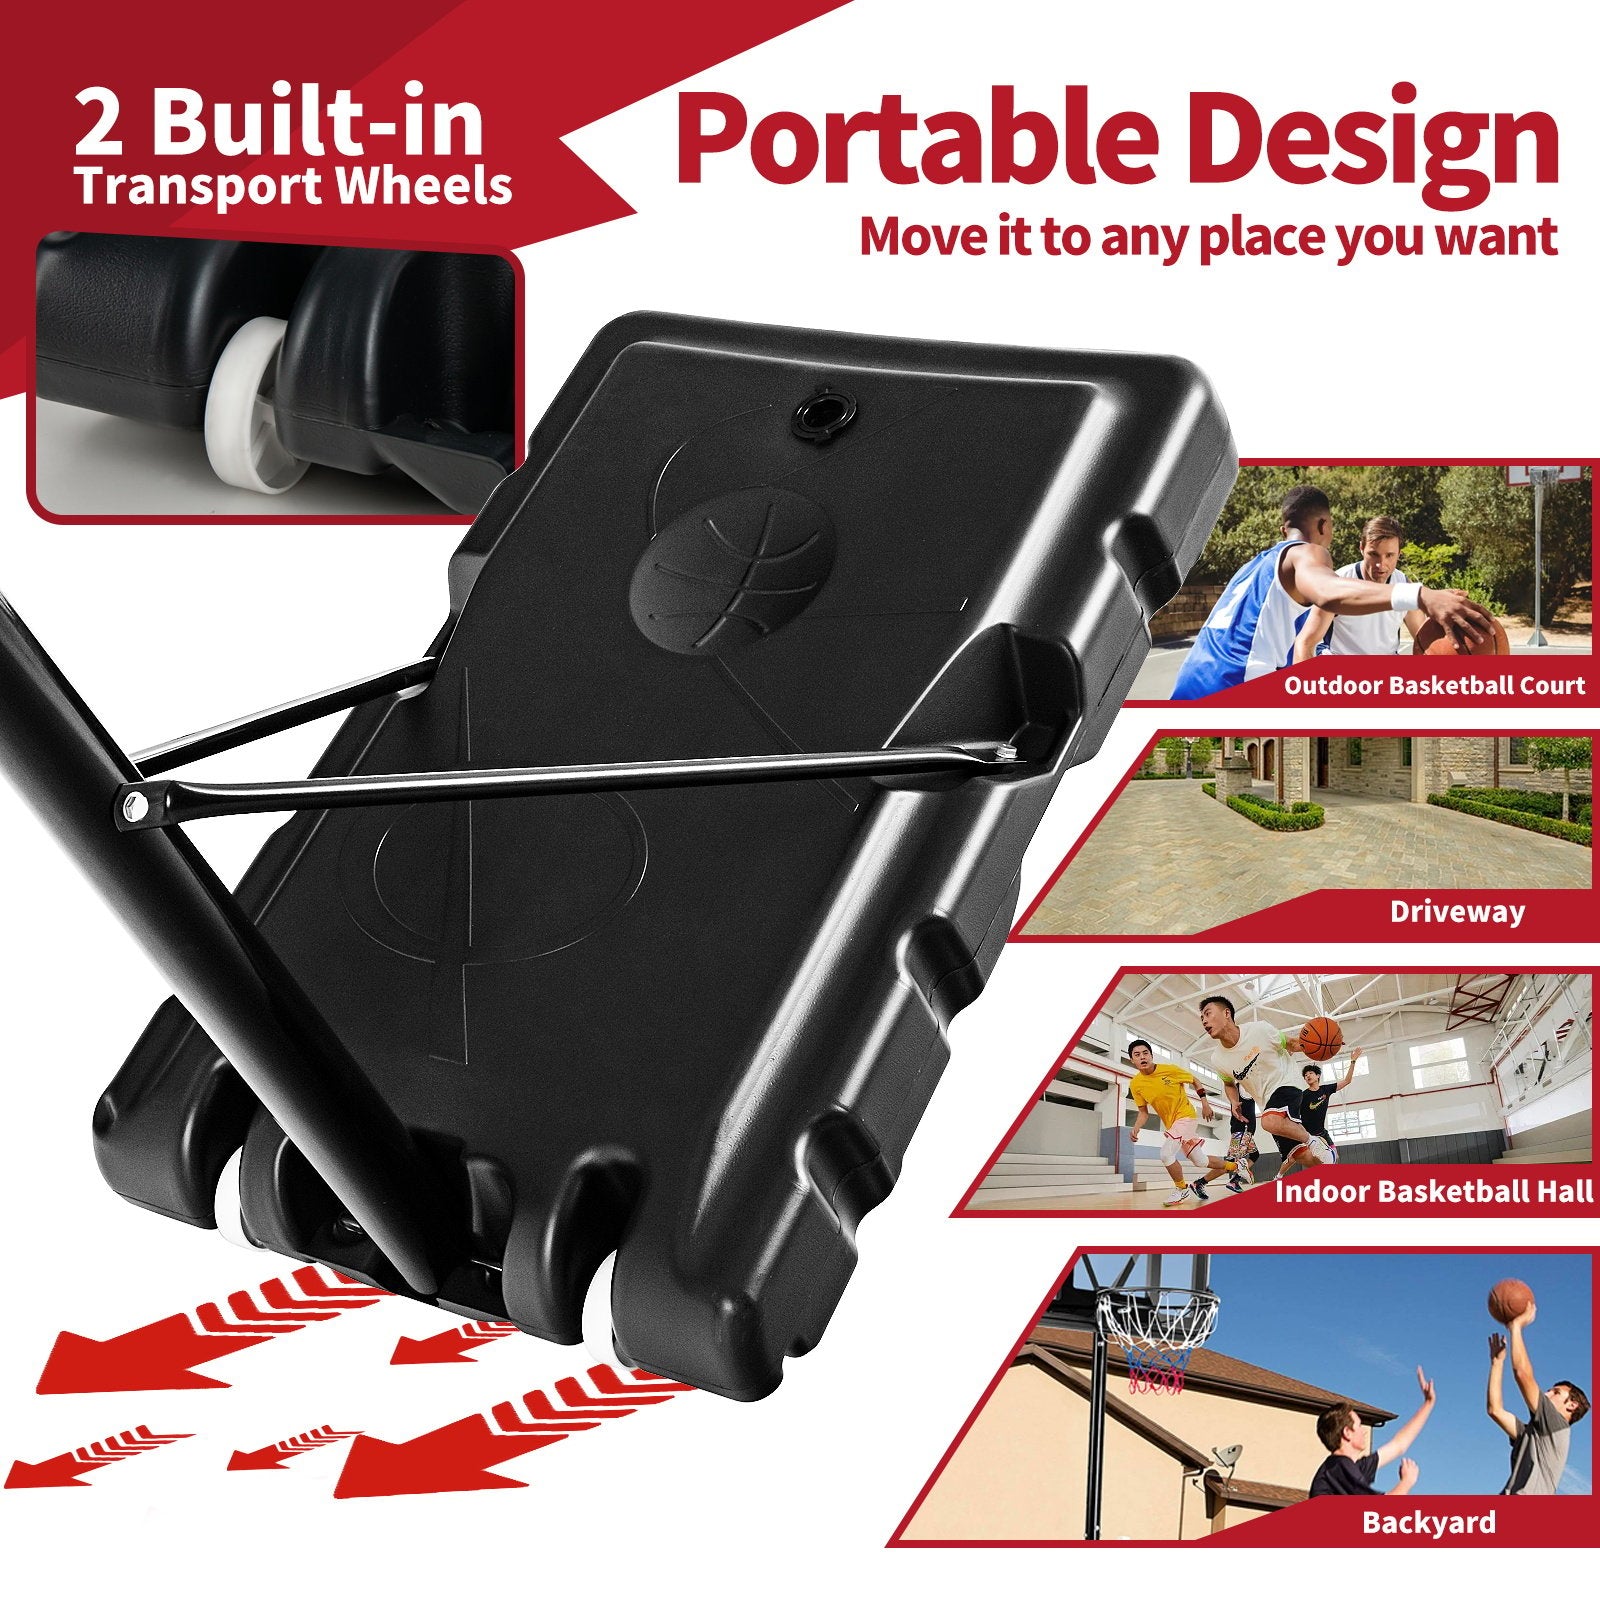 Adjustable Portable Basketball Hoop Stand with Shatterproof Backboard Wheels, Black at Gallery Canada